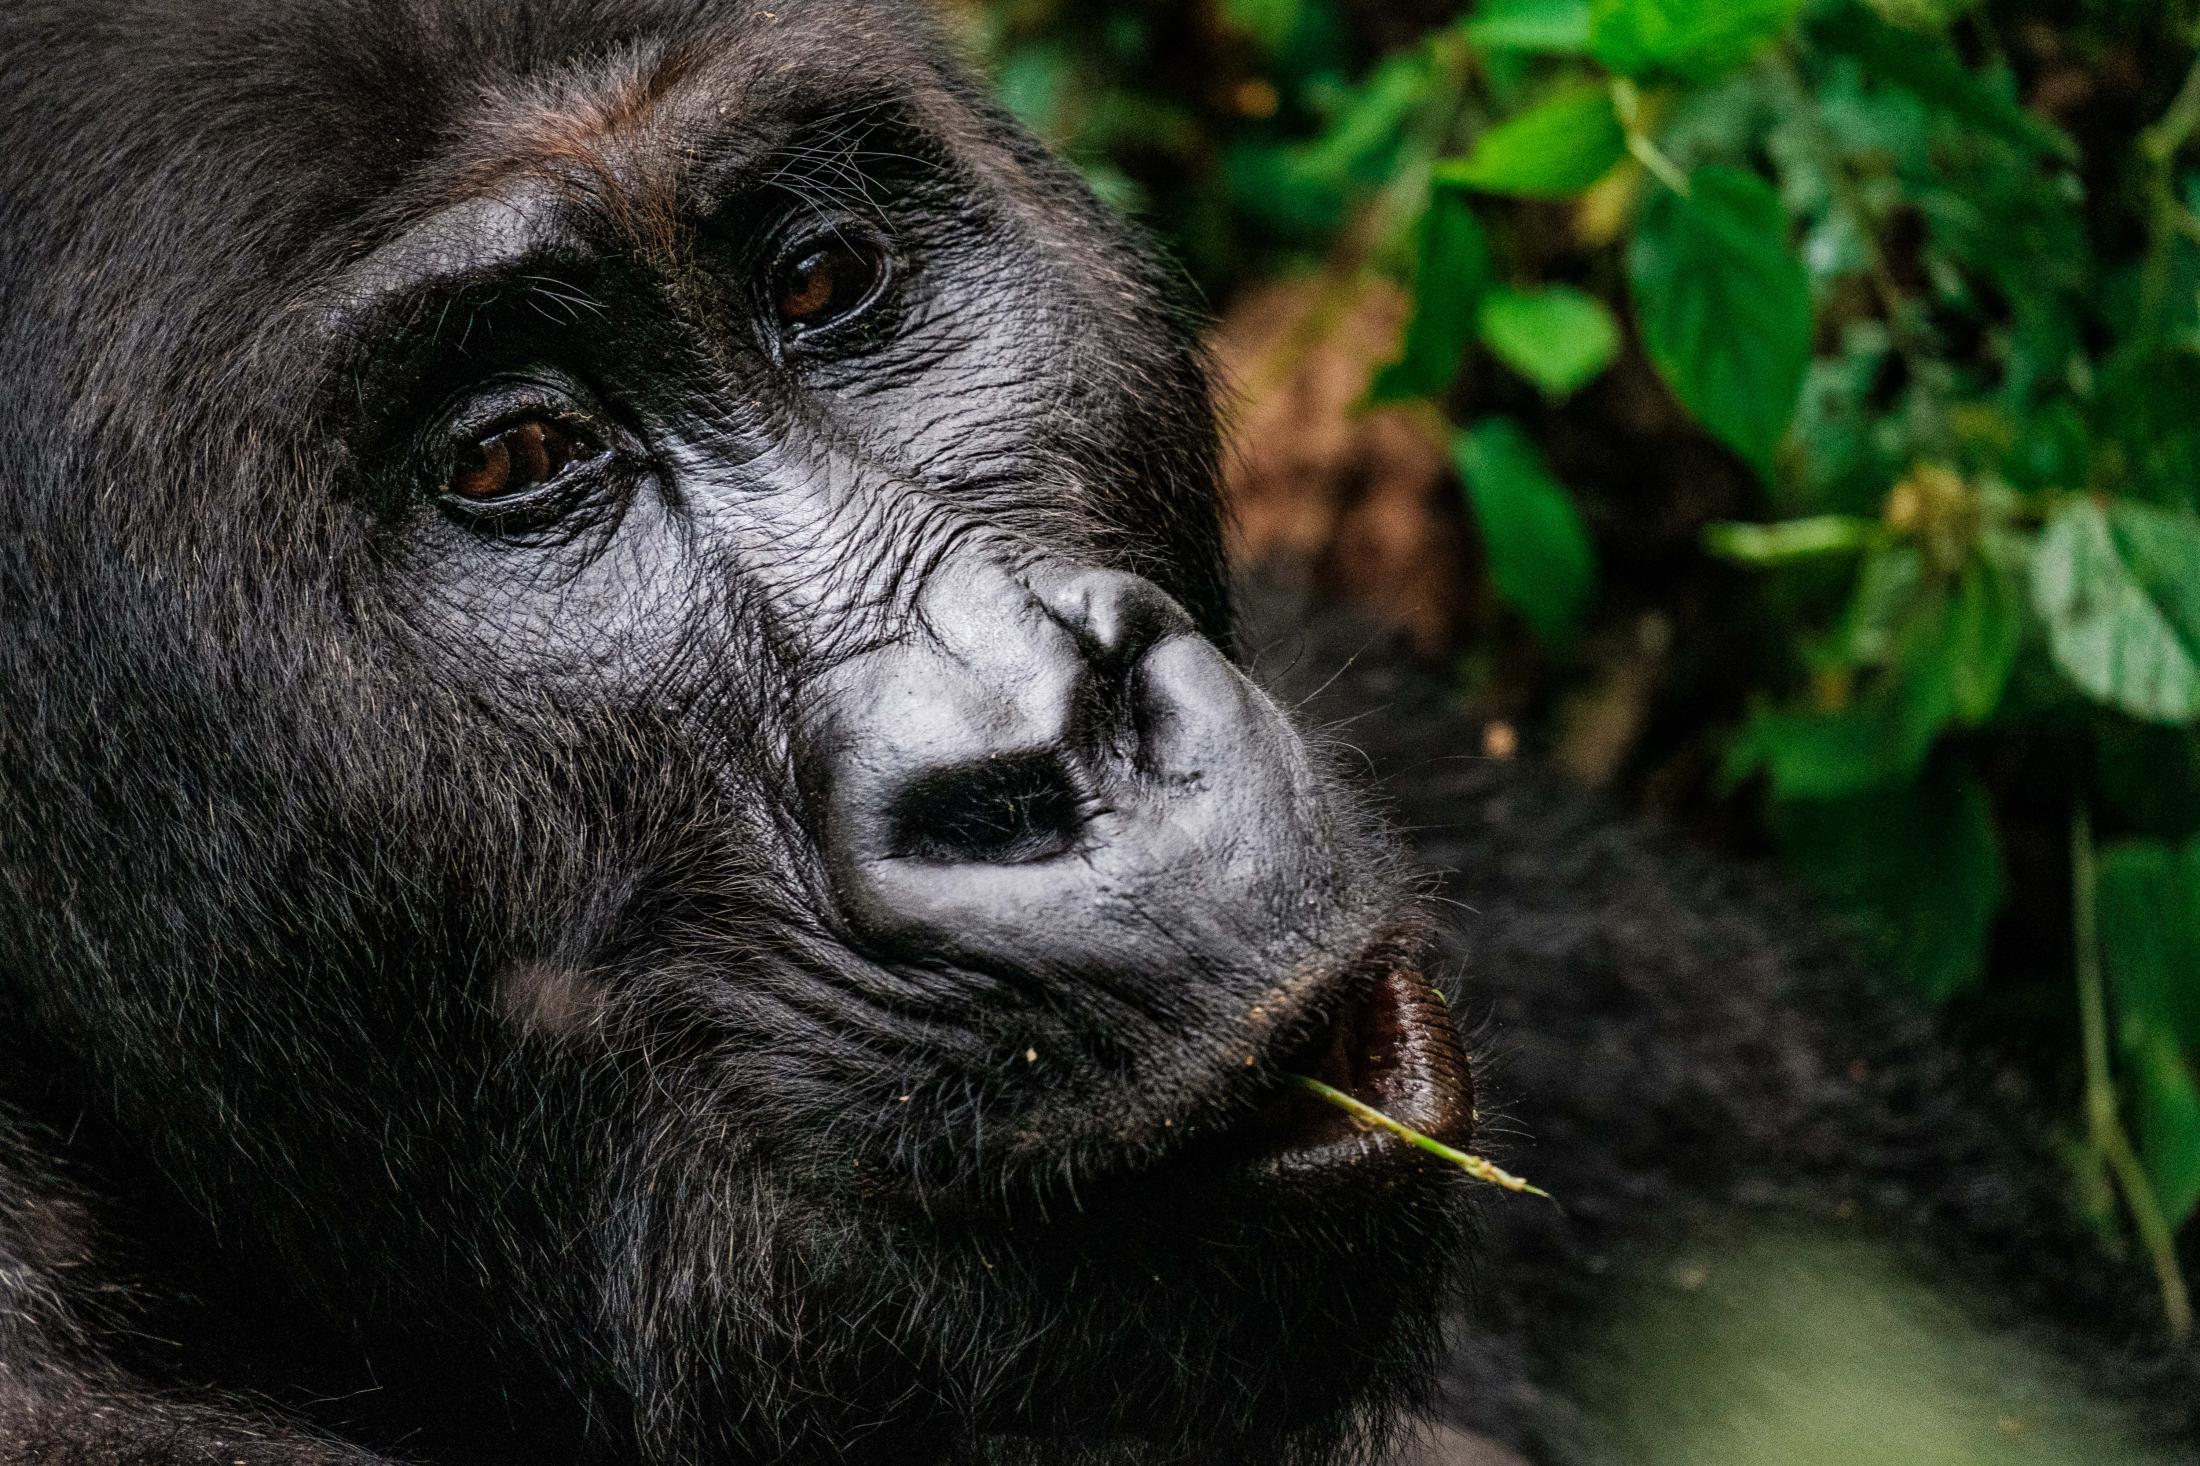 The lowland gorillas of Kahuzi-Biega